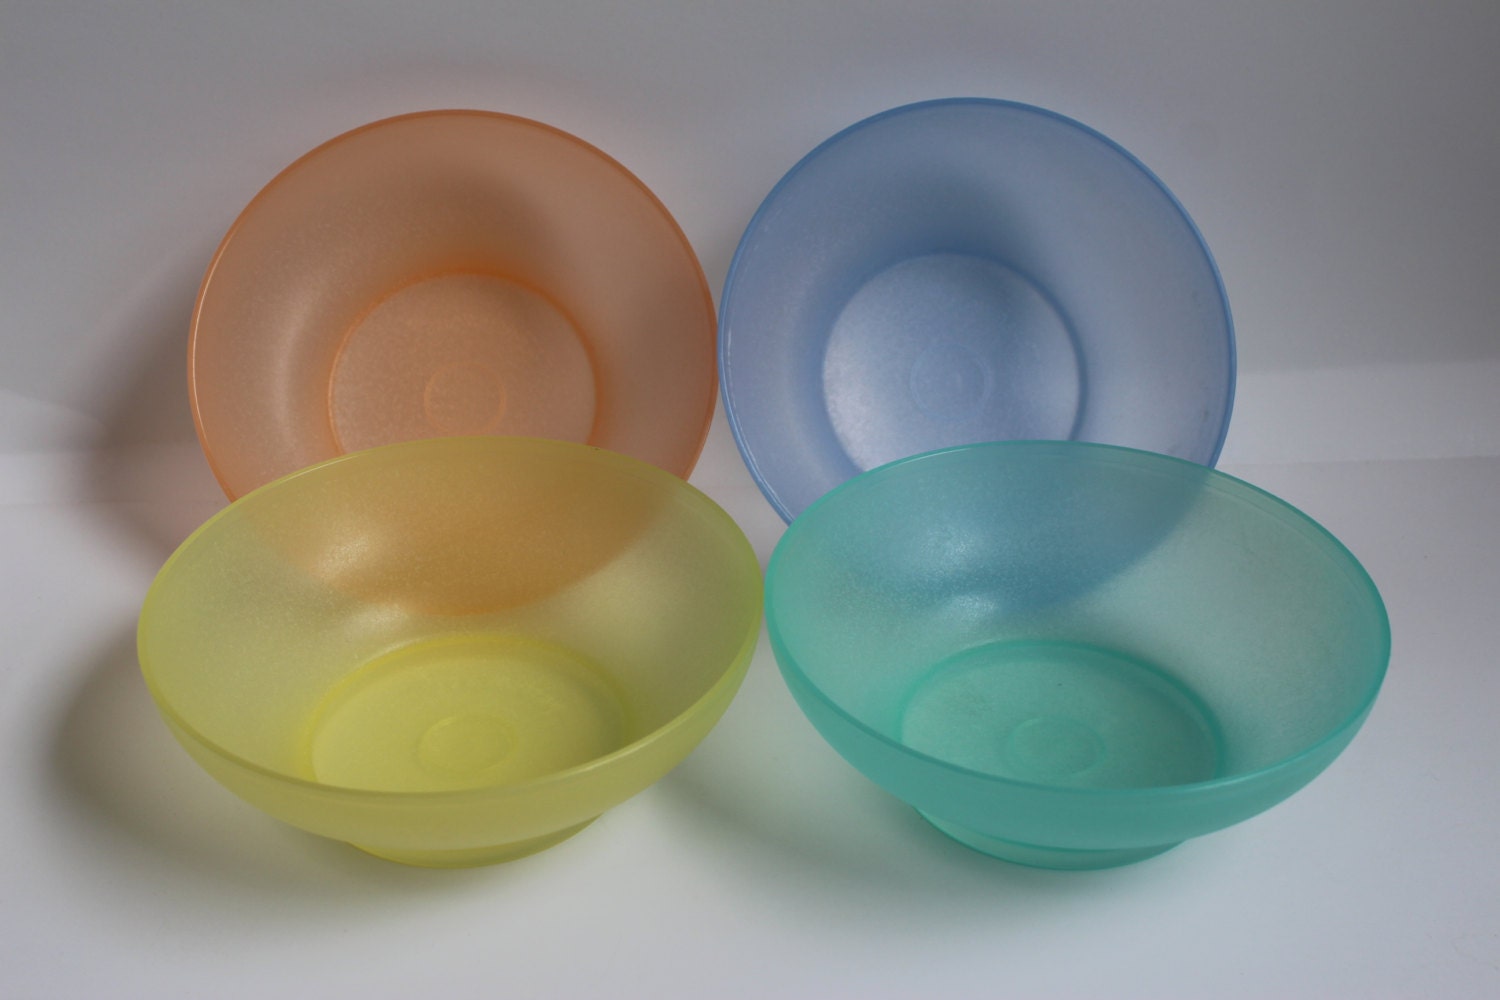 TUPPERWARE PLASTIC BOWLS multi color cereal bowls 1970s